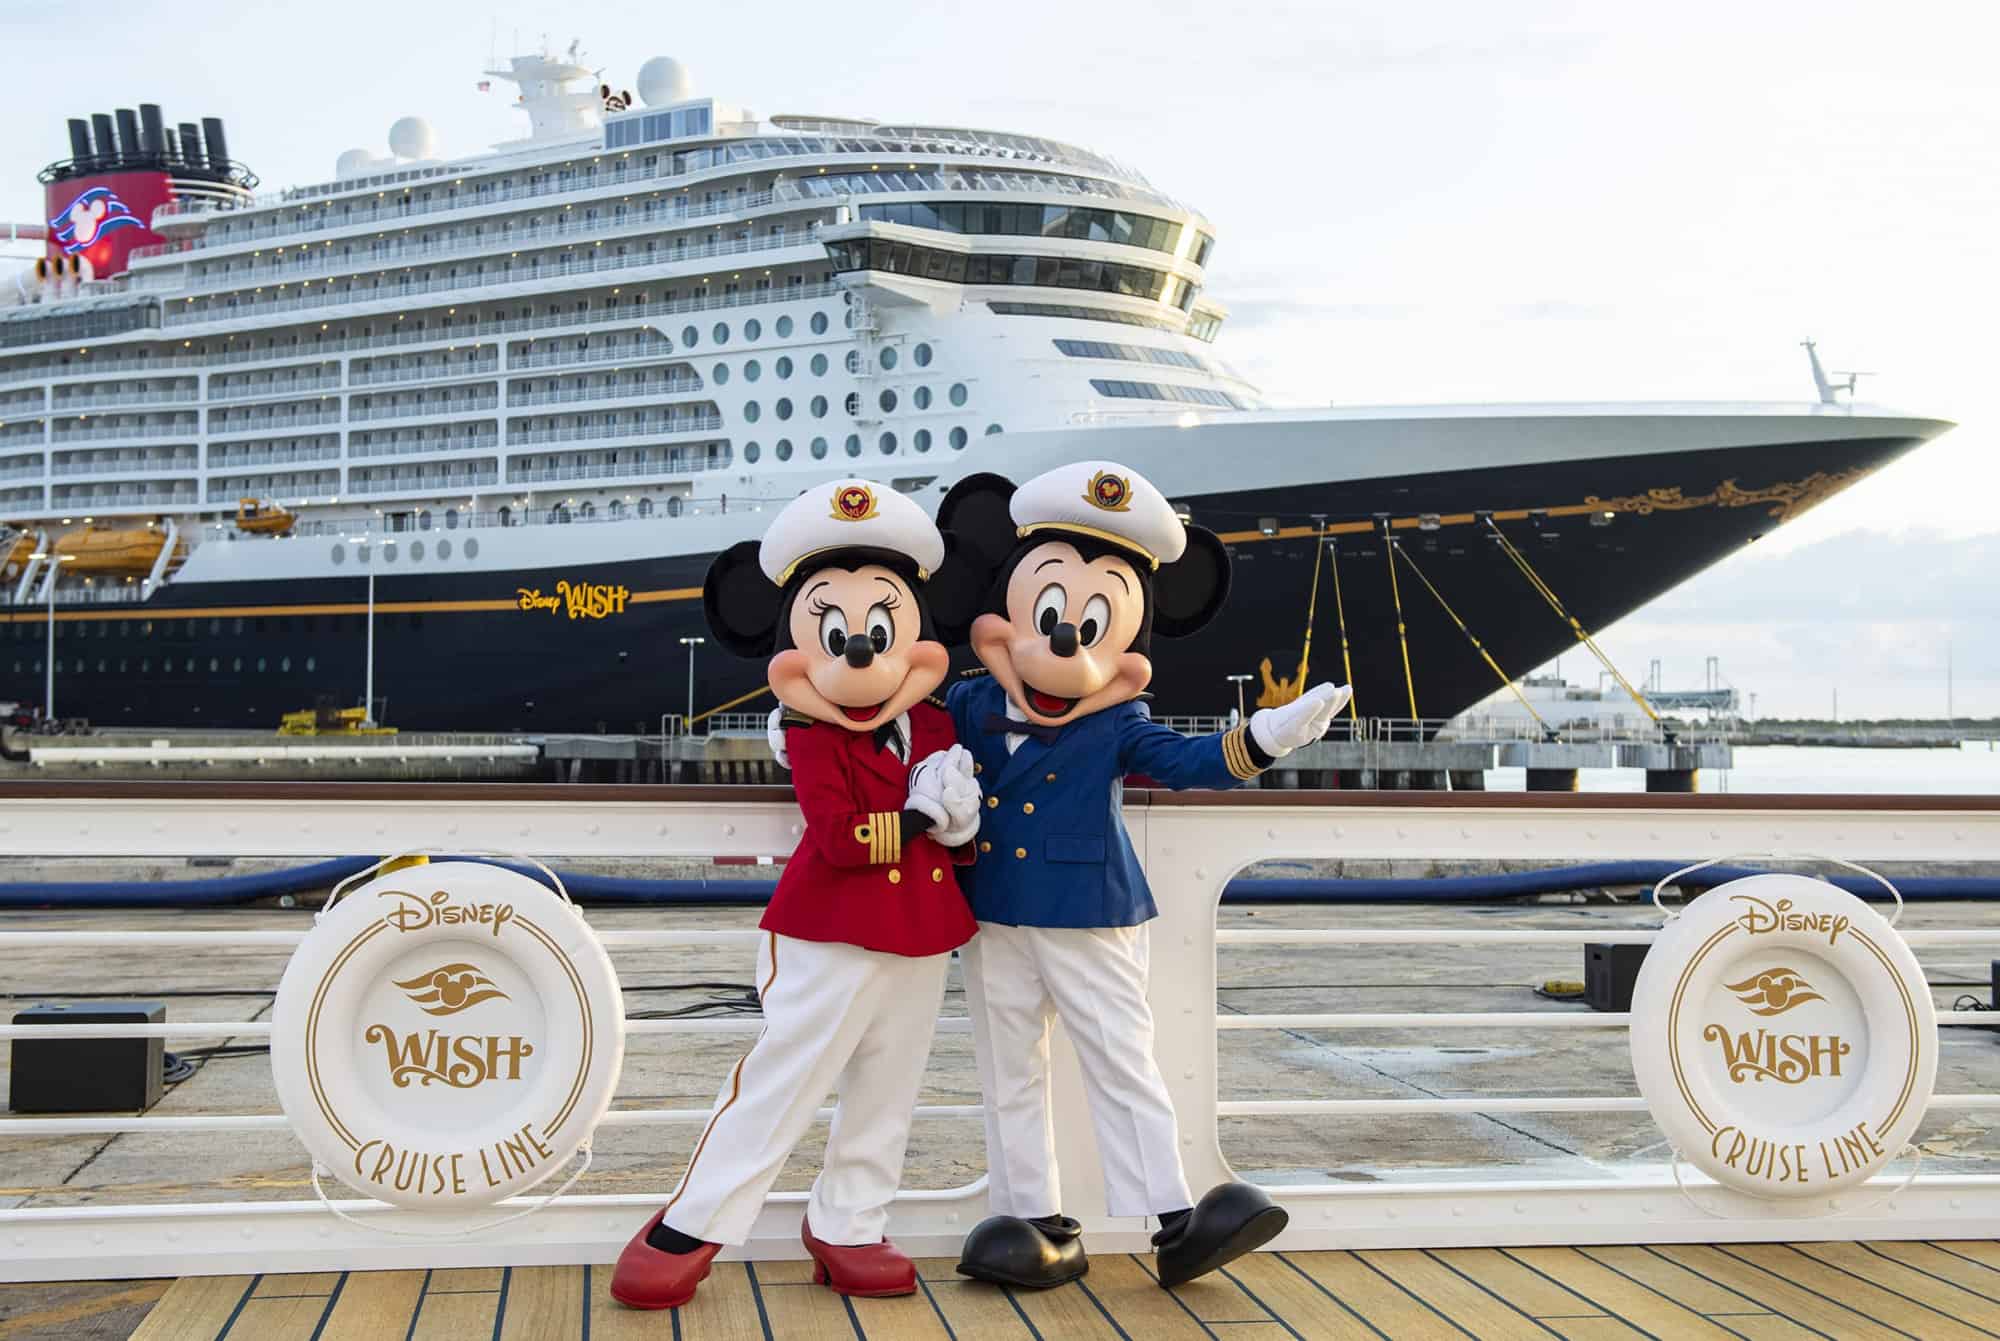 2022 Disney Cruise Line DCL Disney Wish Cruise Ship Ornament